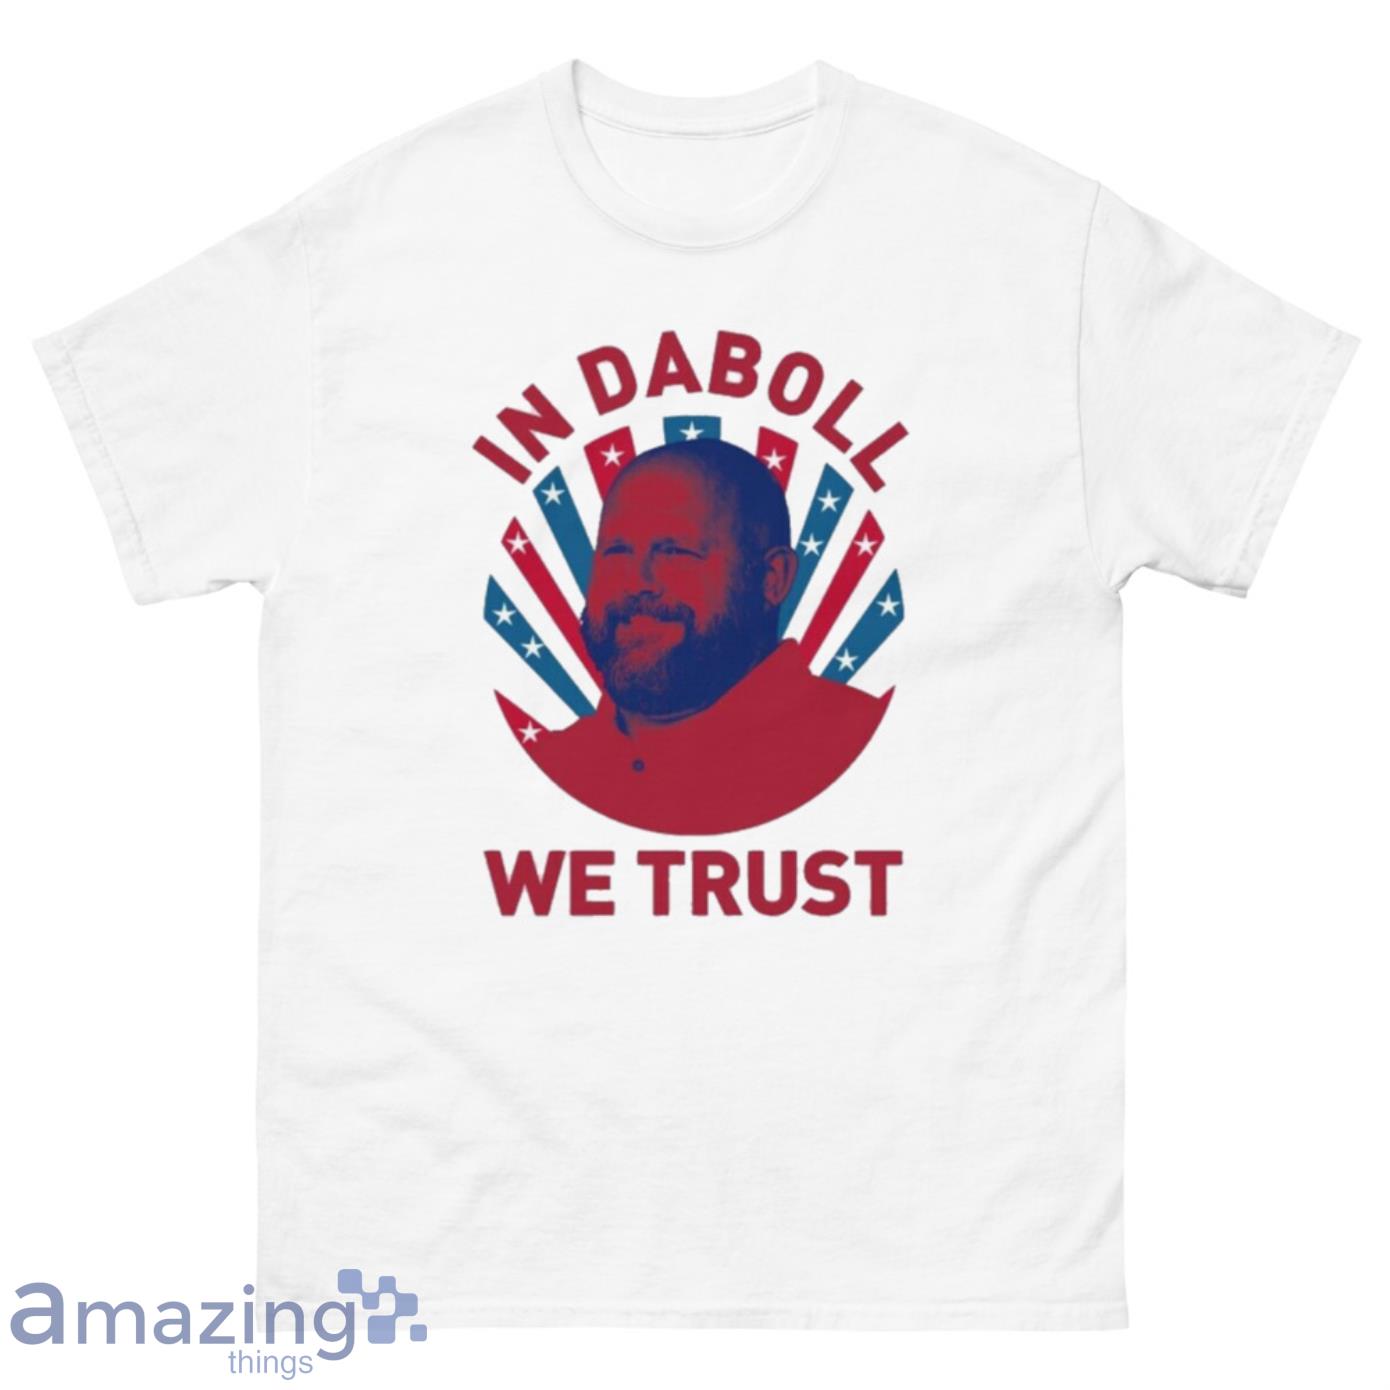 Brian Daboll In Daboll We Trust T Shirt, Brian Daboll New York Giants Coach Shirt - G500 Men’s Classic T-Shirt-1